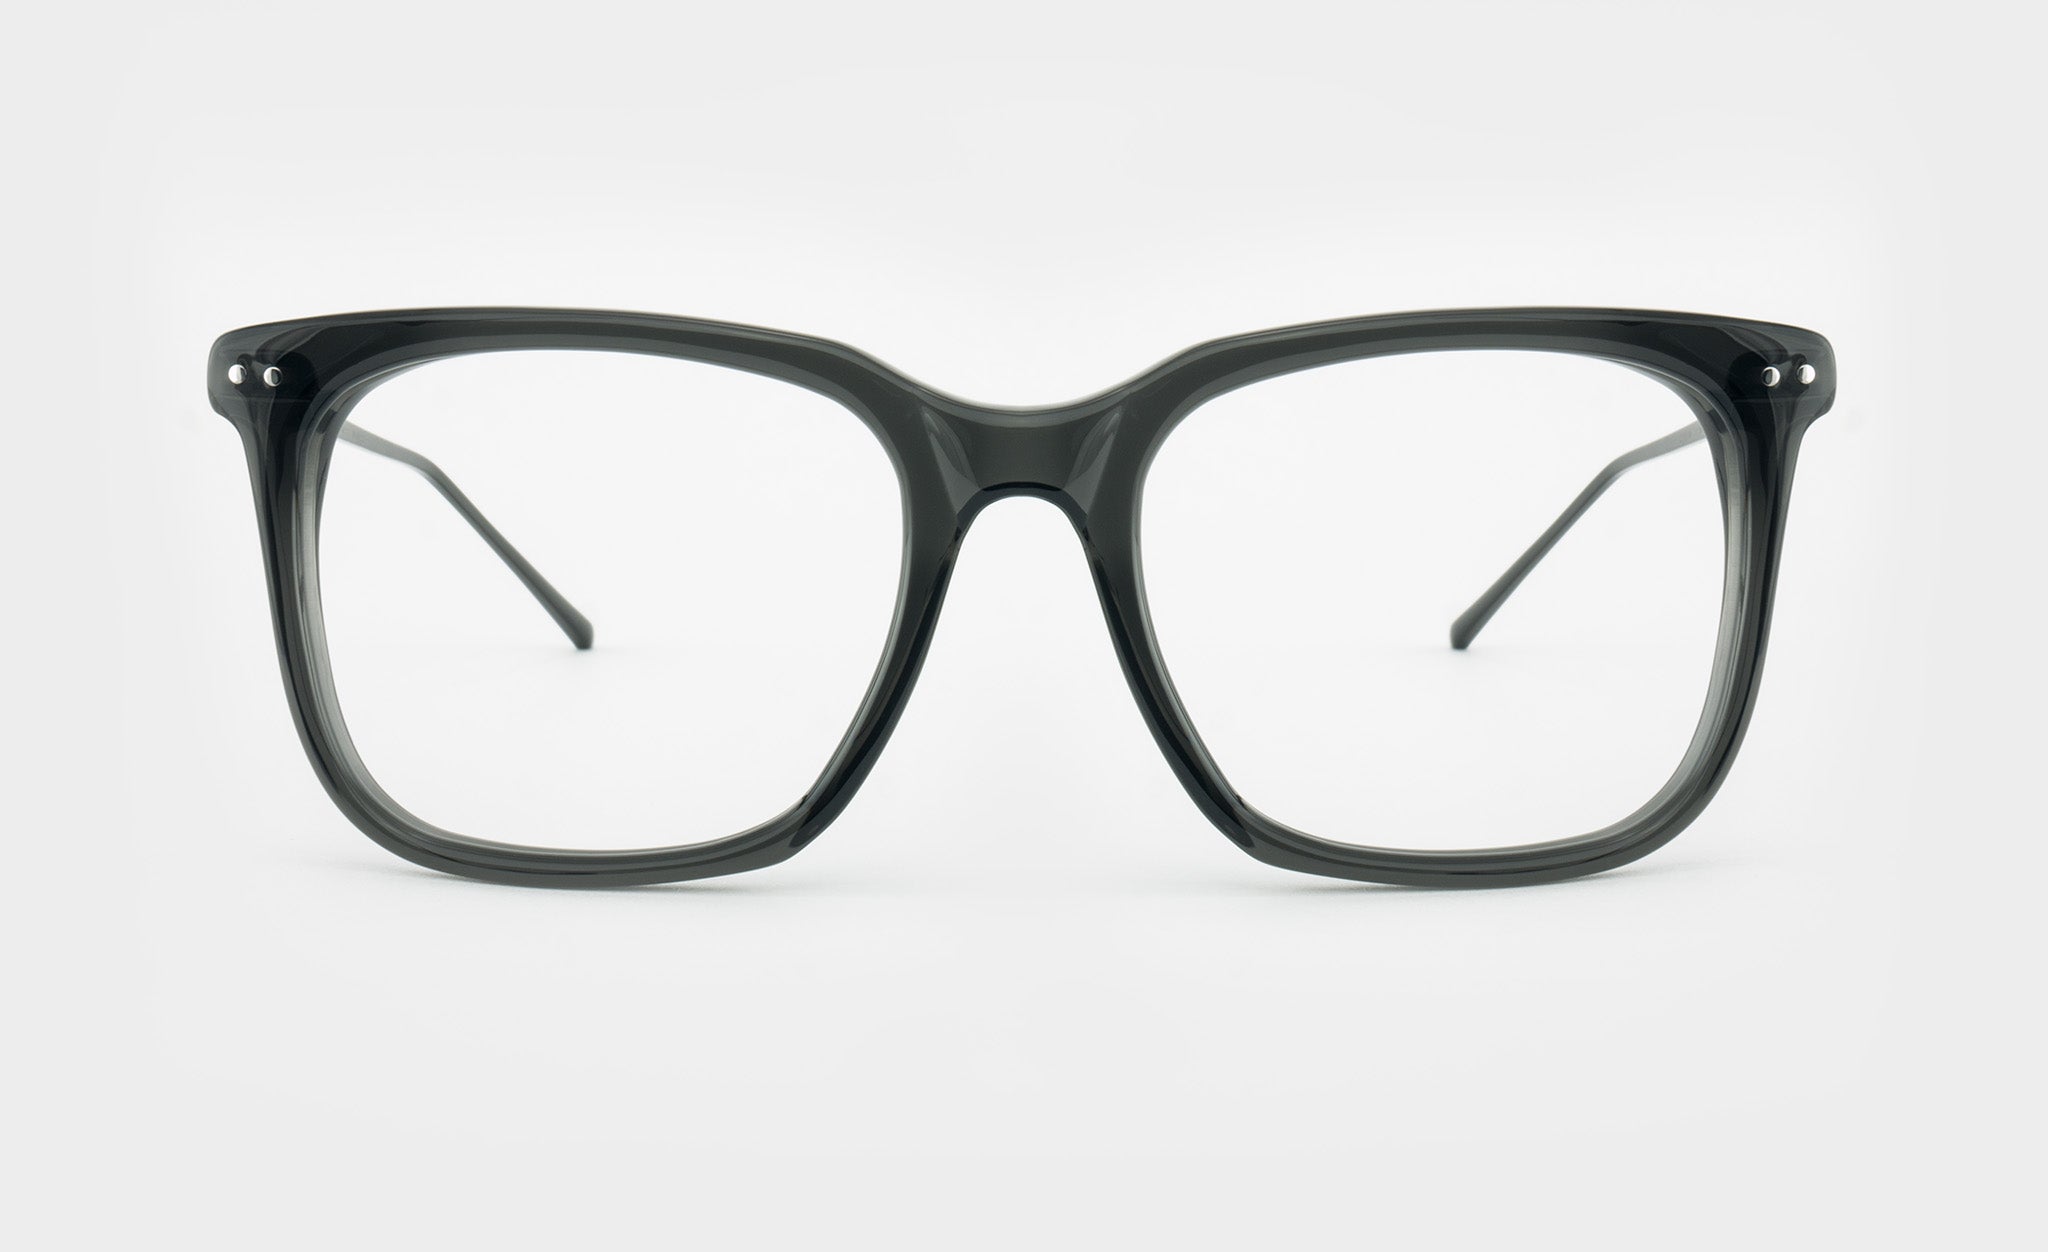 Large square grey glasses frame